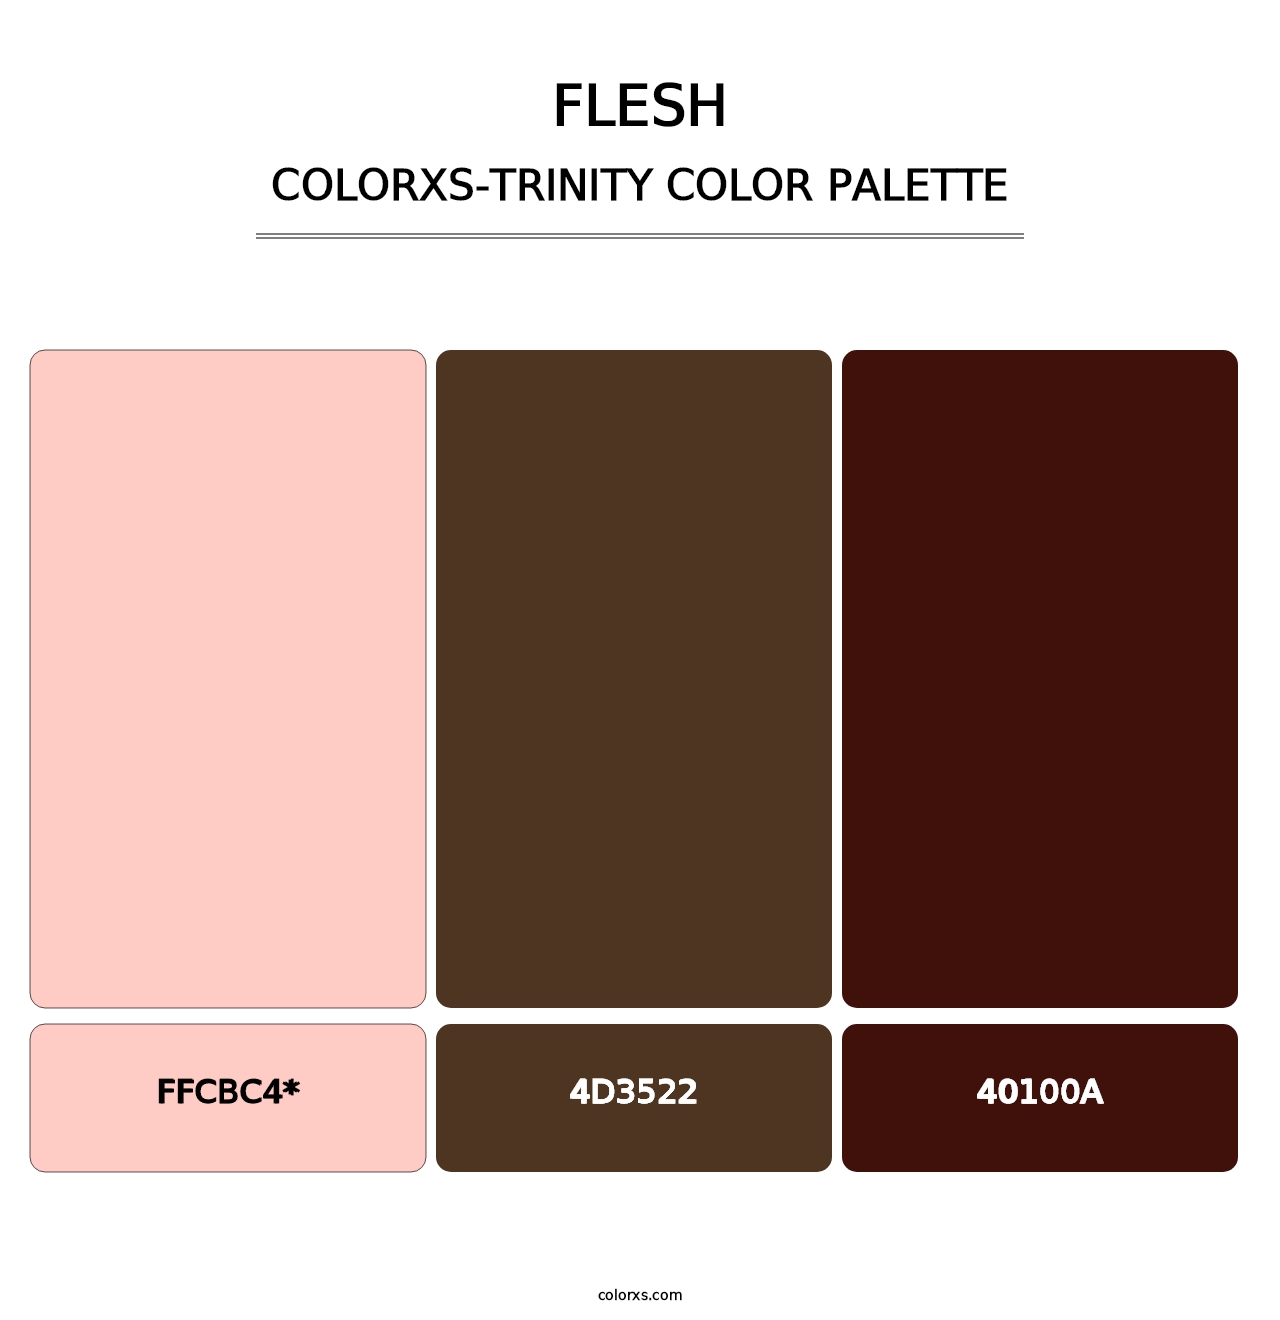 Flesh - Colorxs Trinity Palette